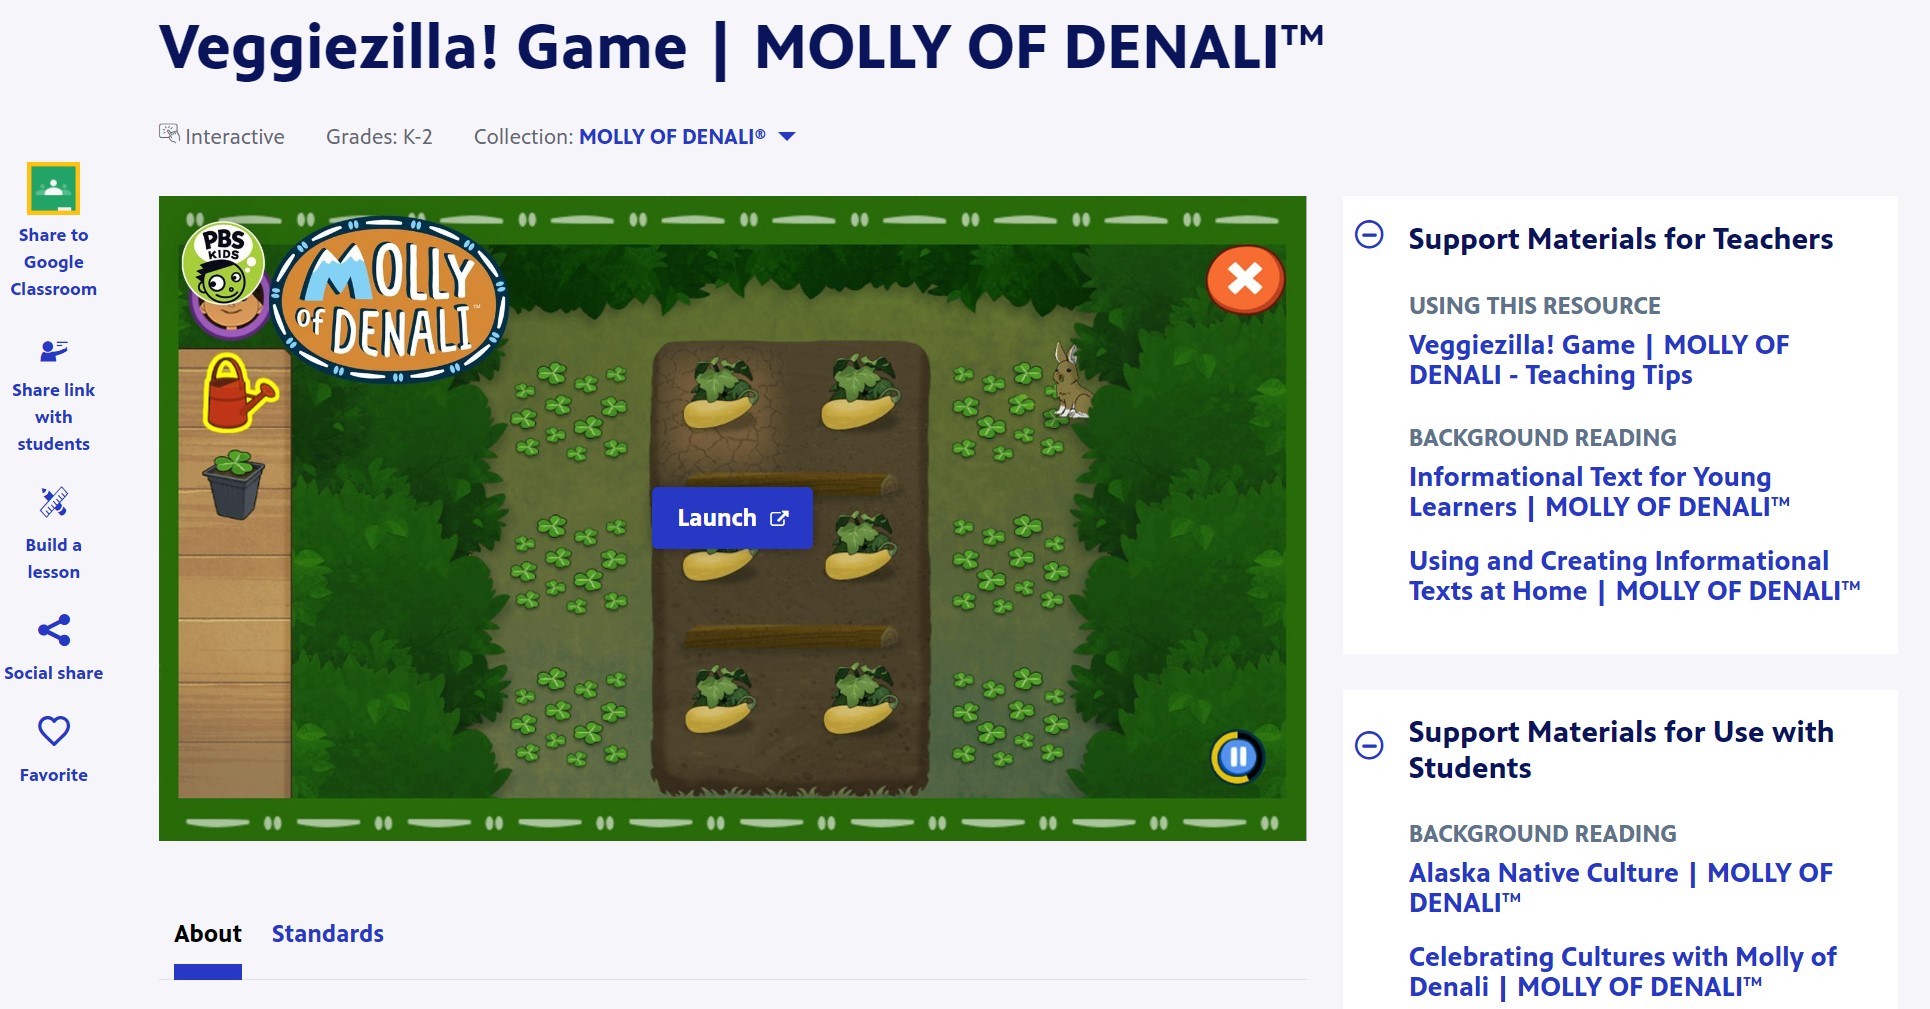 Veggiezilla! Game | MOLLY OF DENALI™